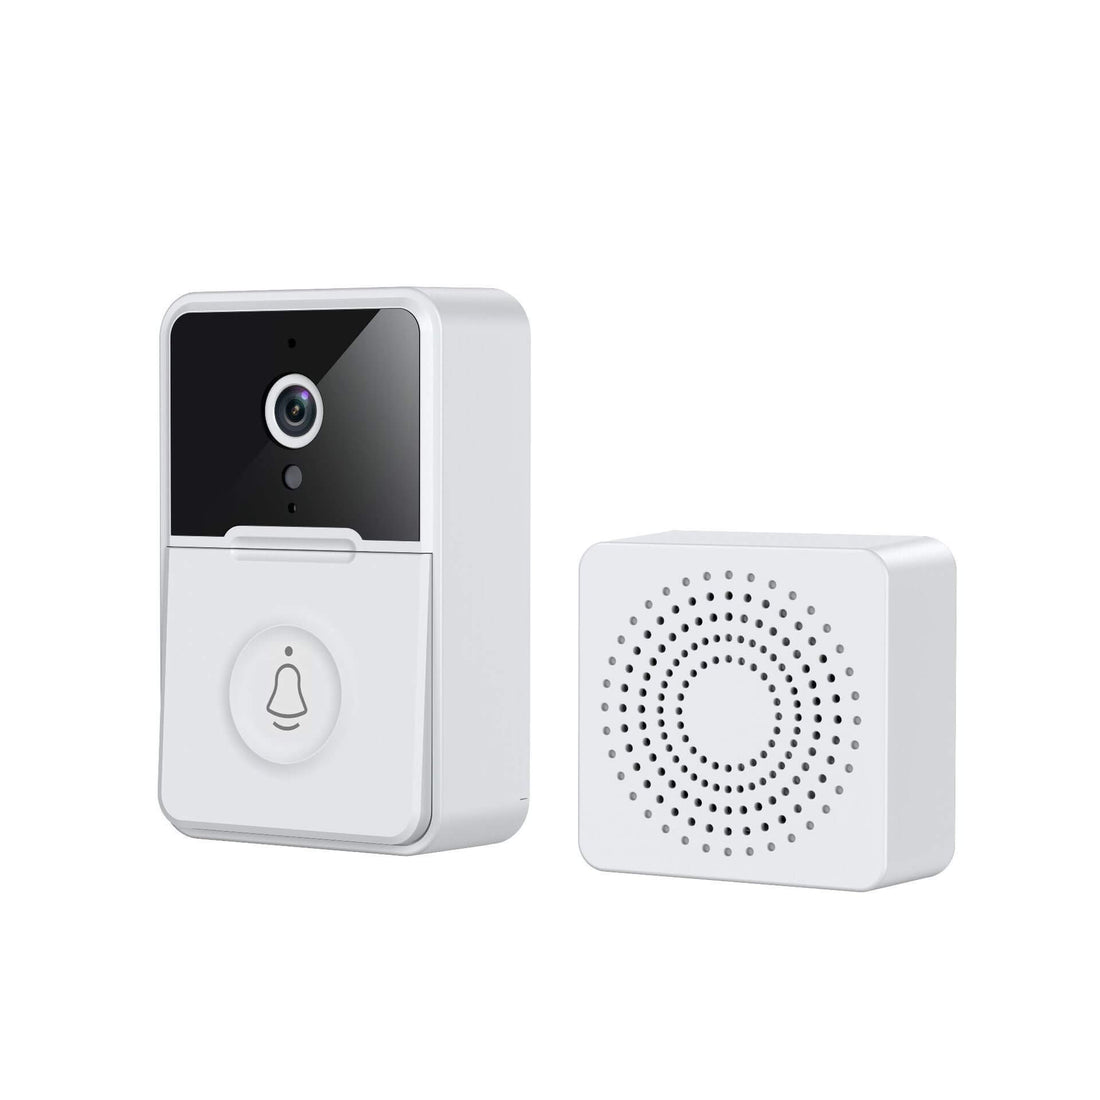 The smart control video doorbell wireless security camera set.